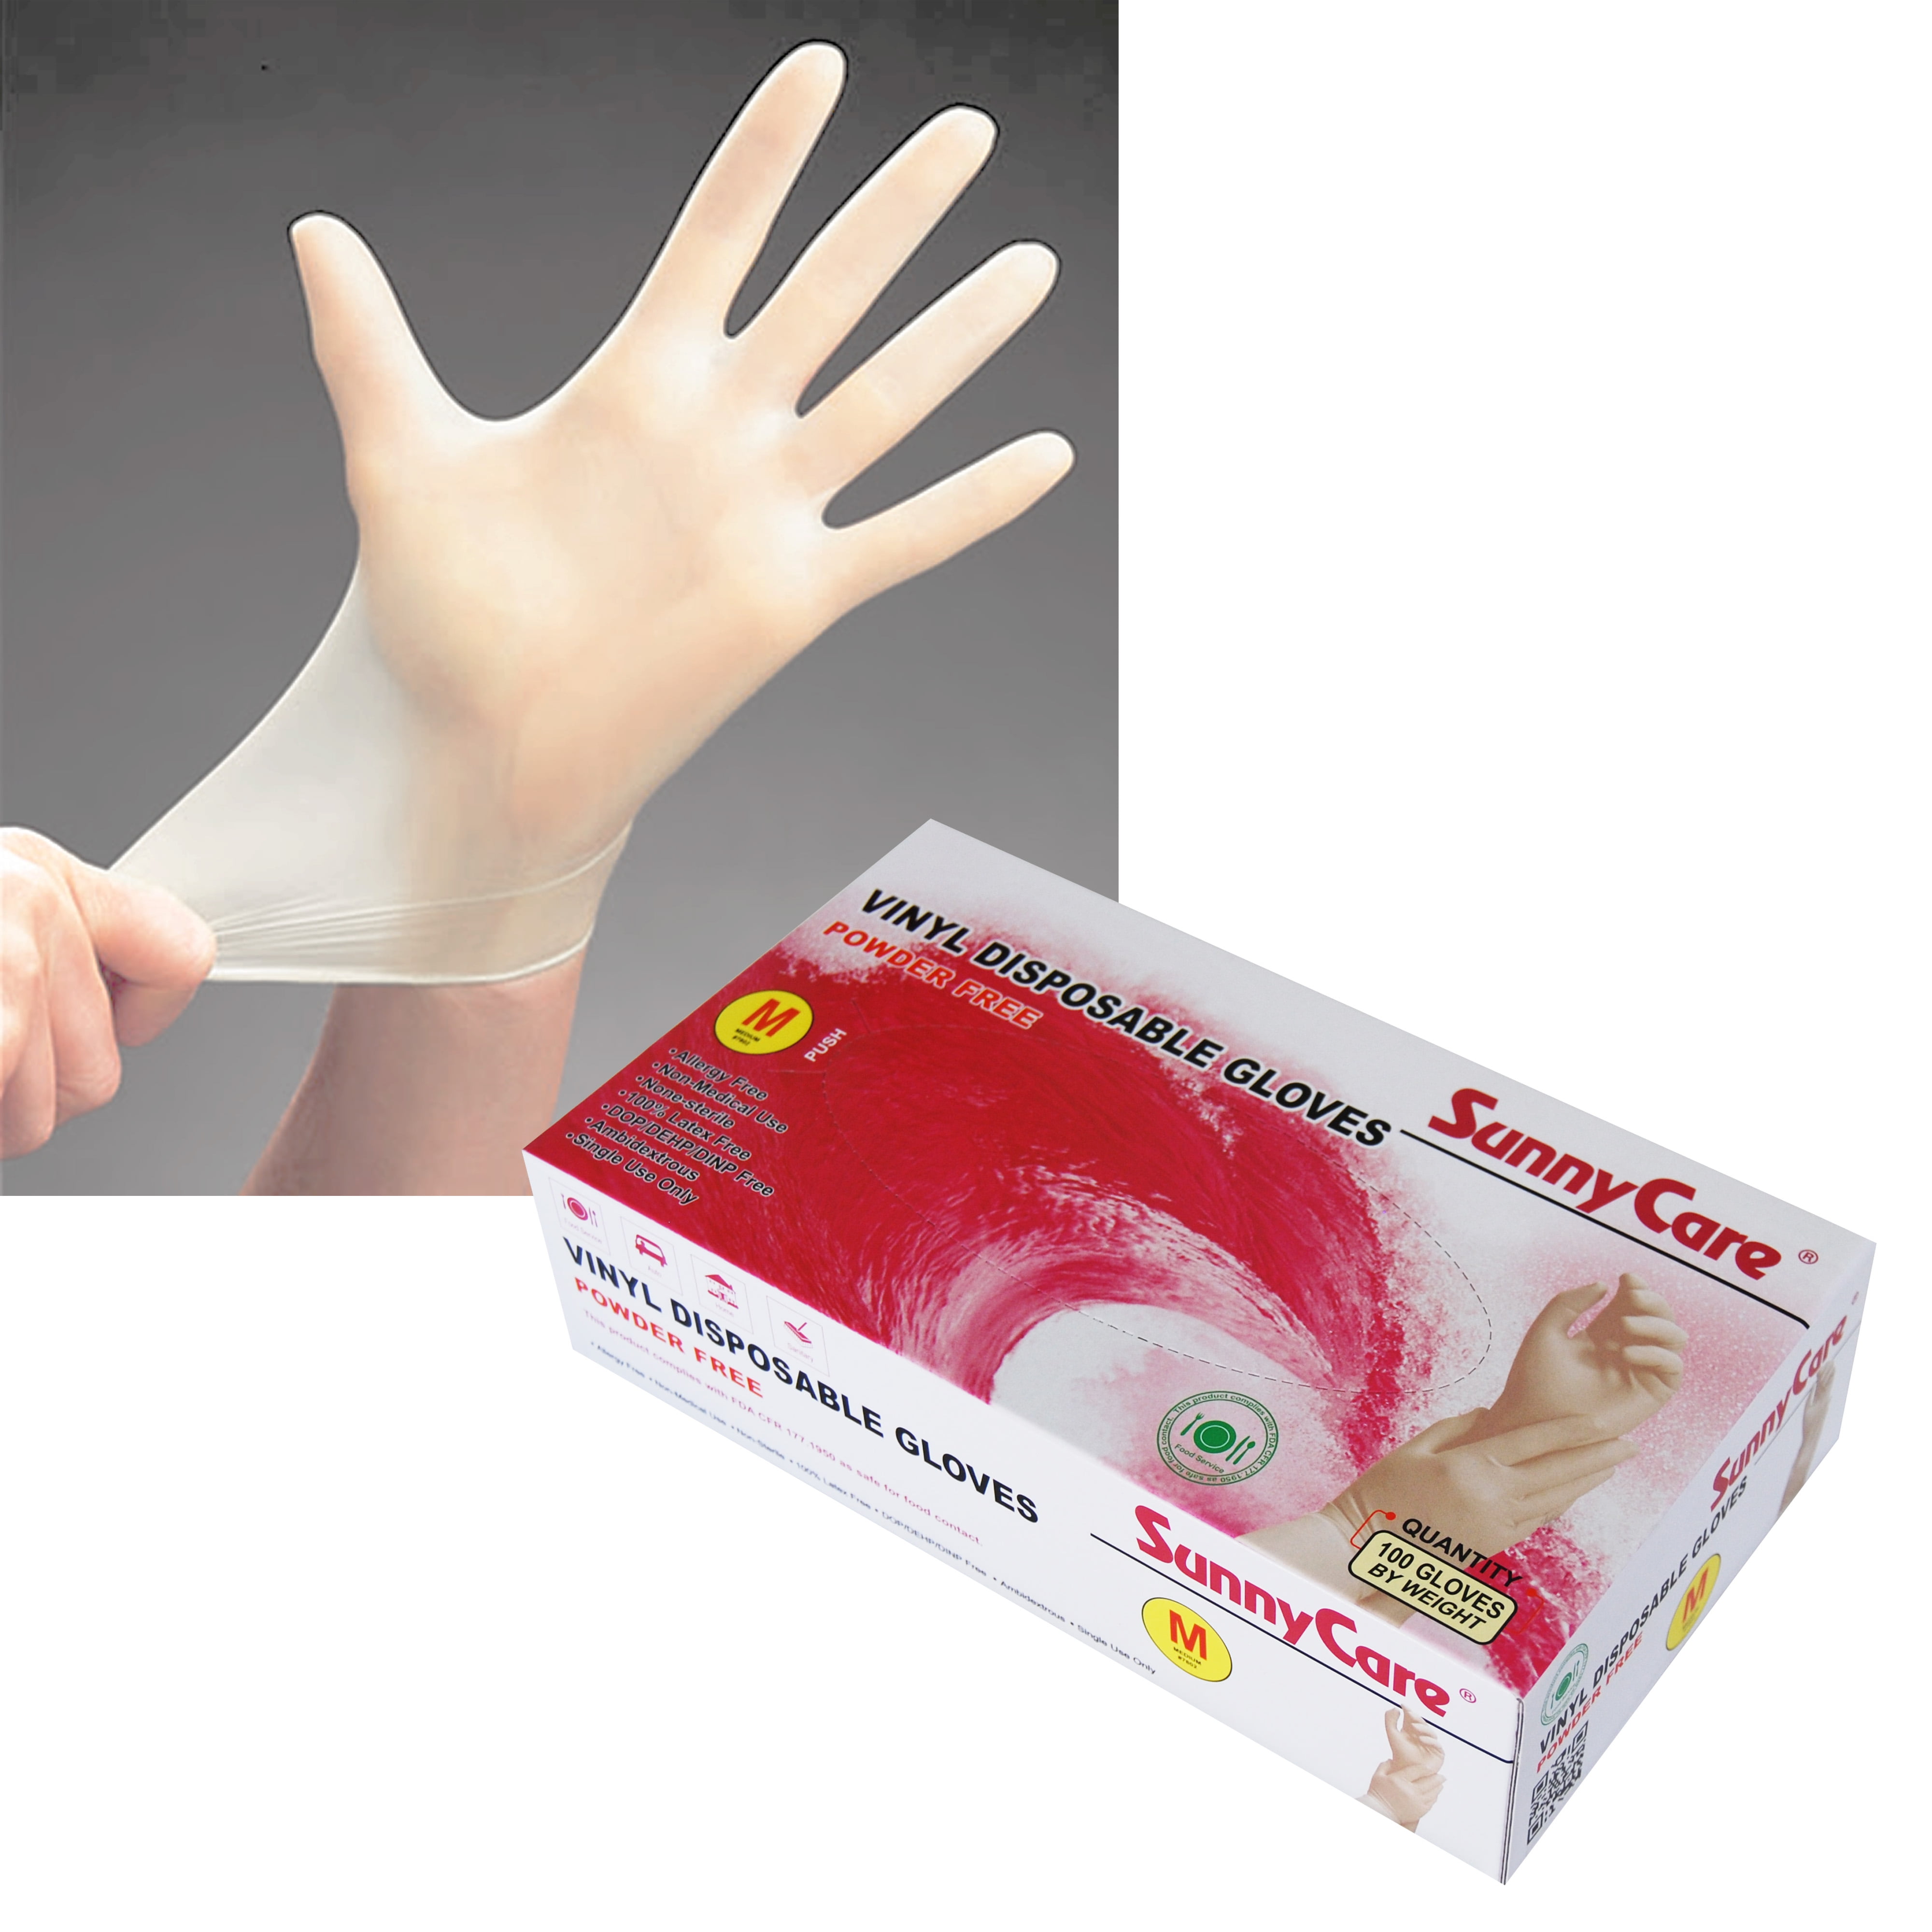 Puritex Powder Free Disposable Vinyl Glove 50pcs Disposable Glove